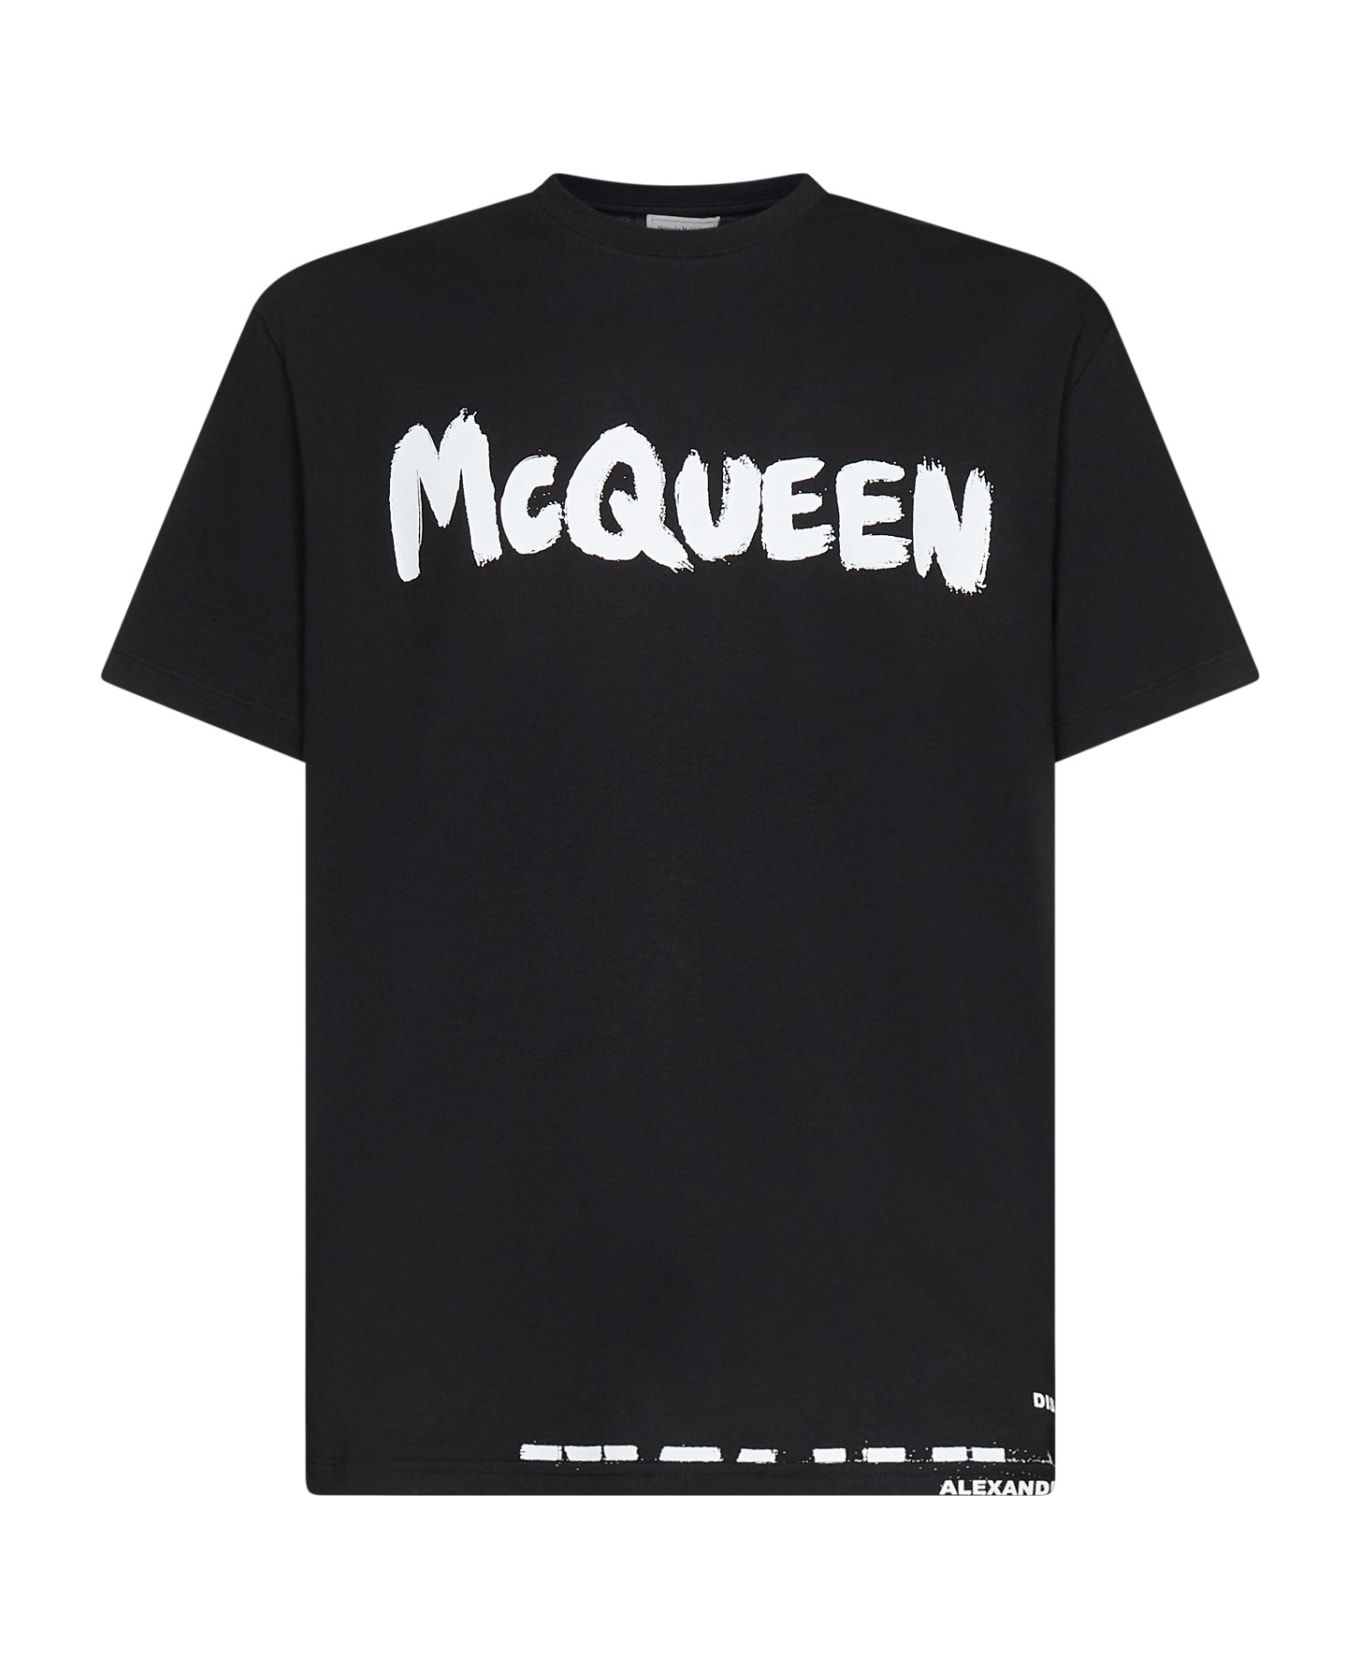 Alexander McQueen Graffiti Print T-shirt - Black シャツ